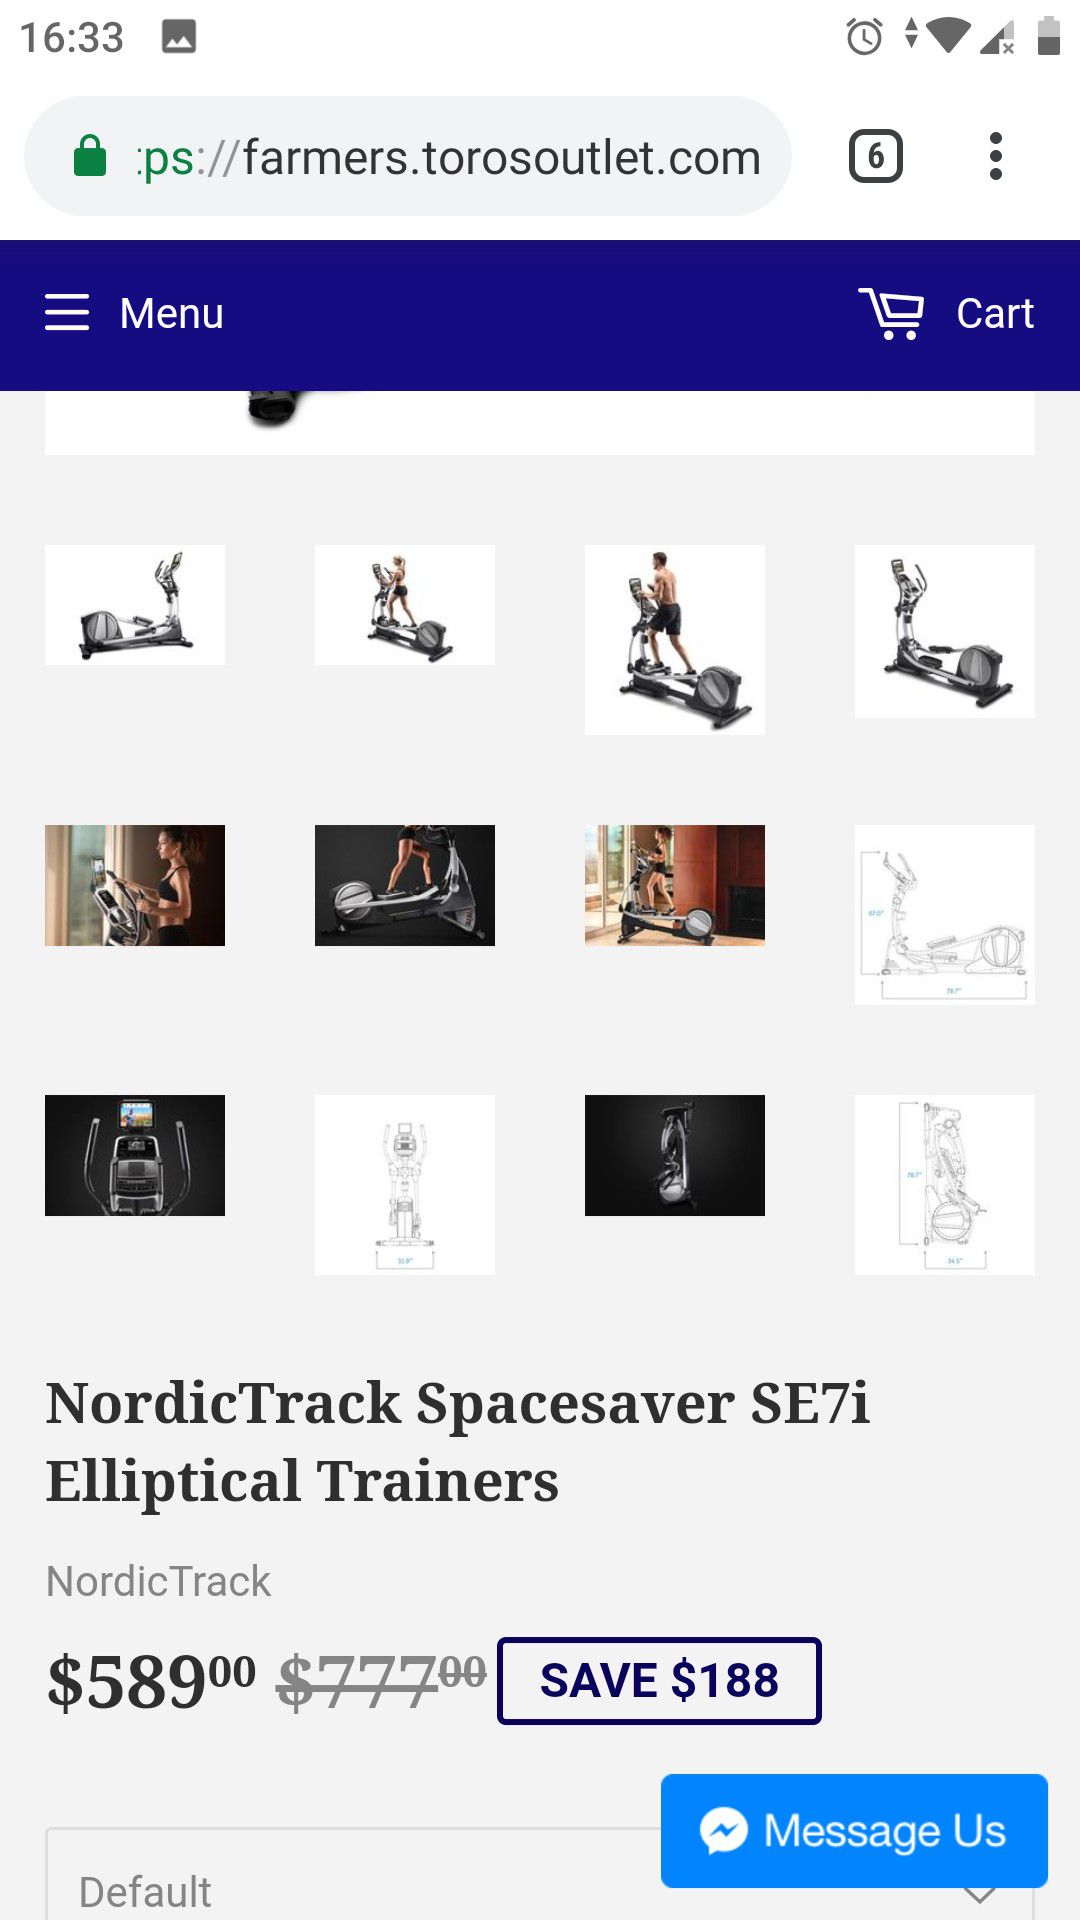 NordicTrack Spacesaver SE7i Elliptical Trainers